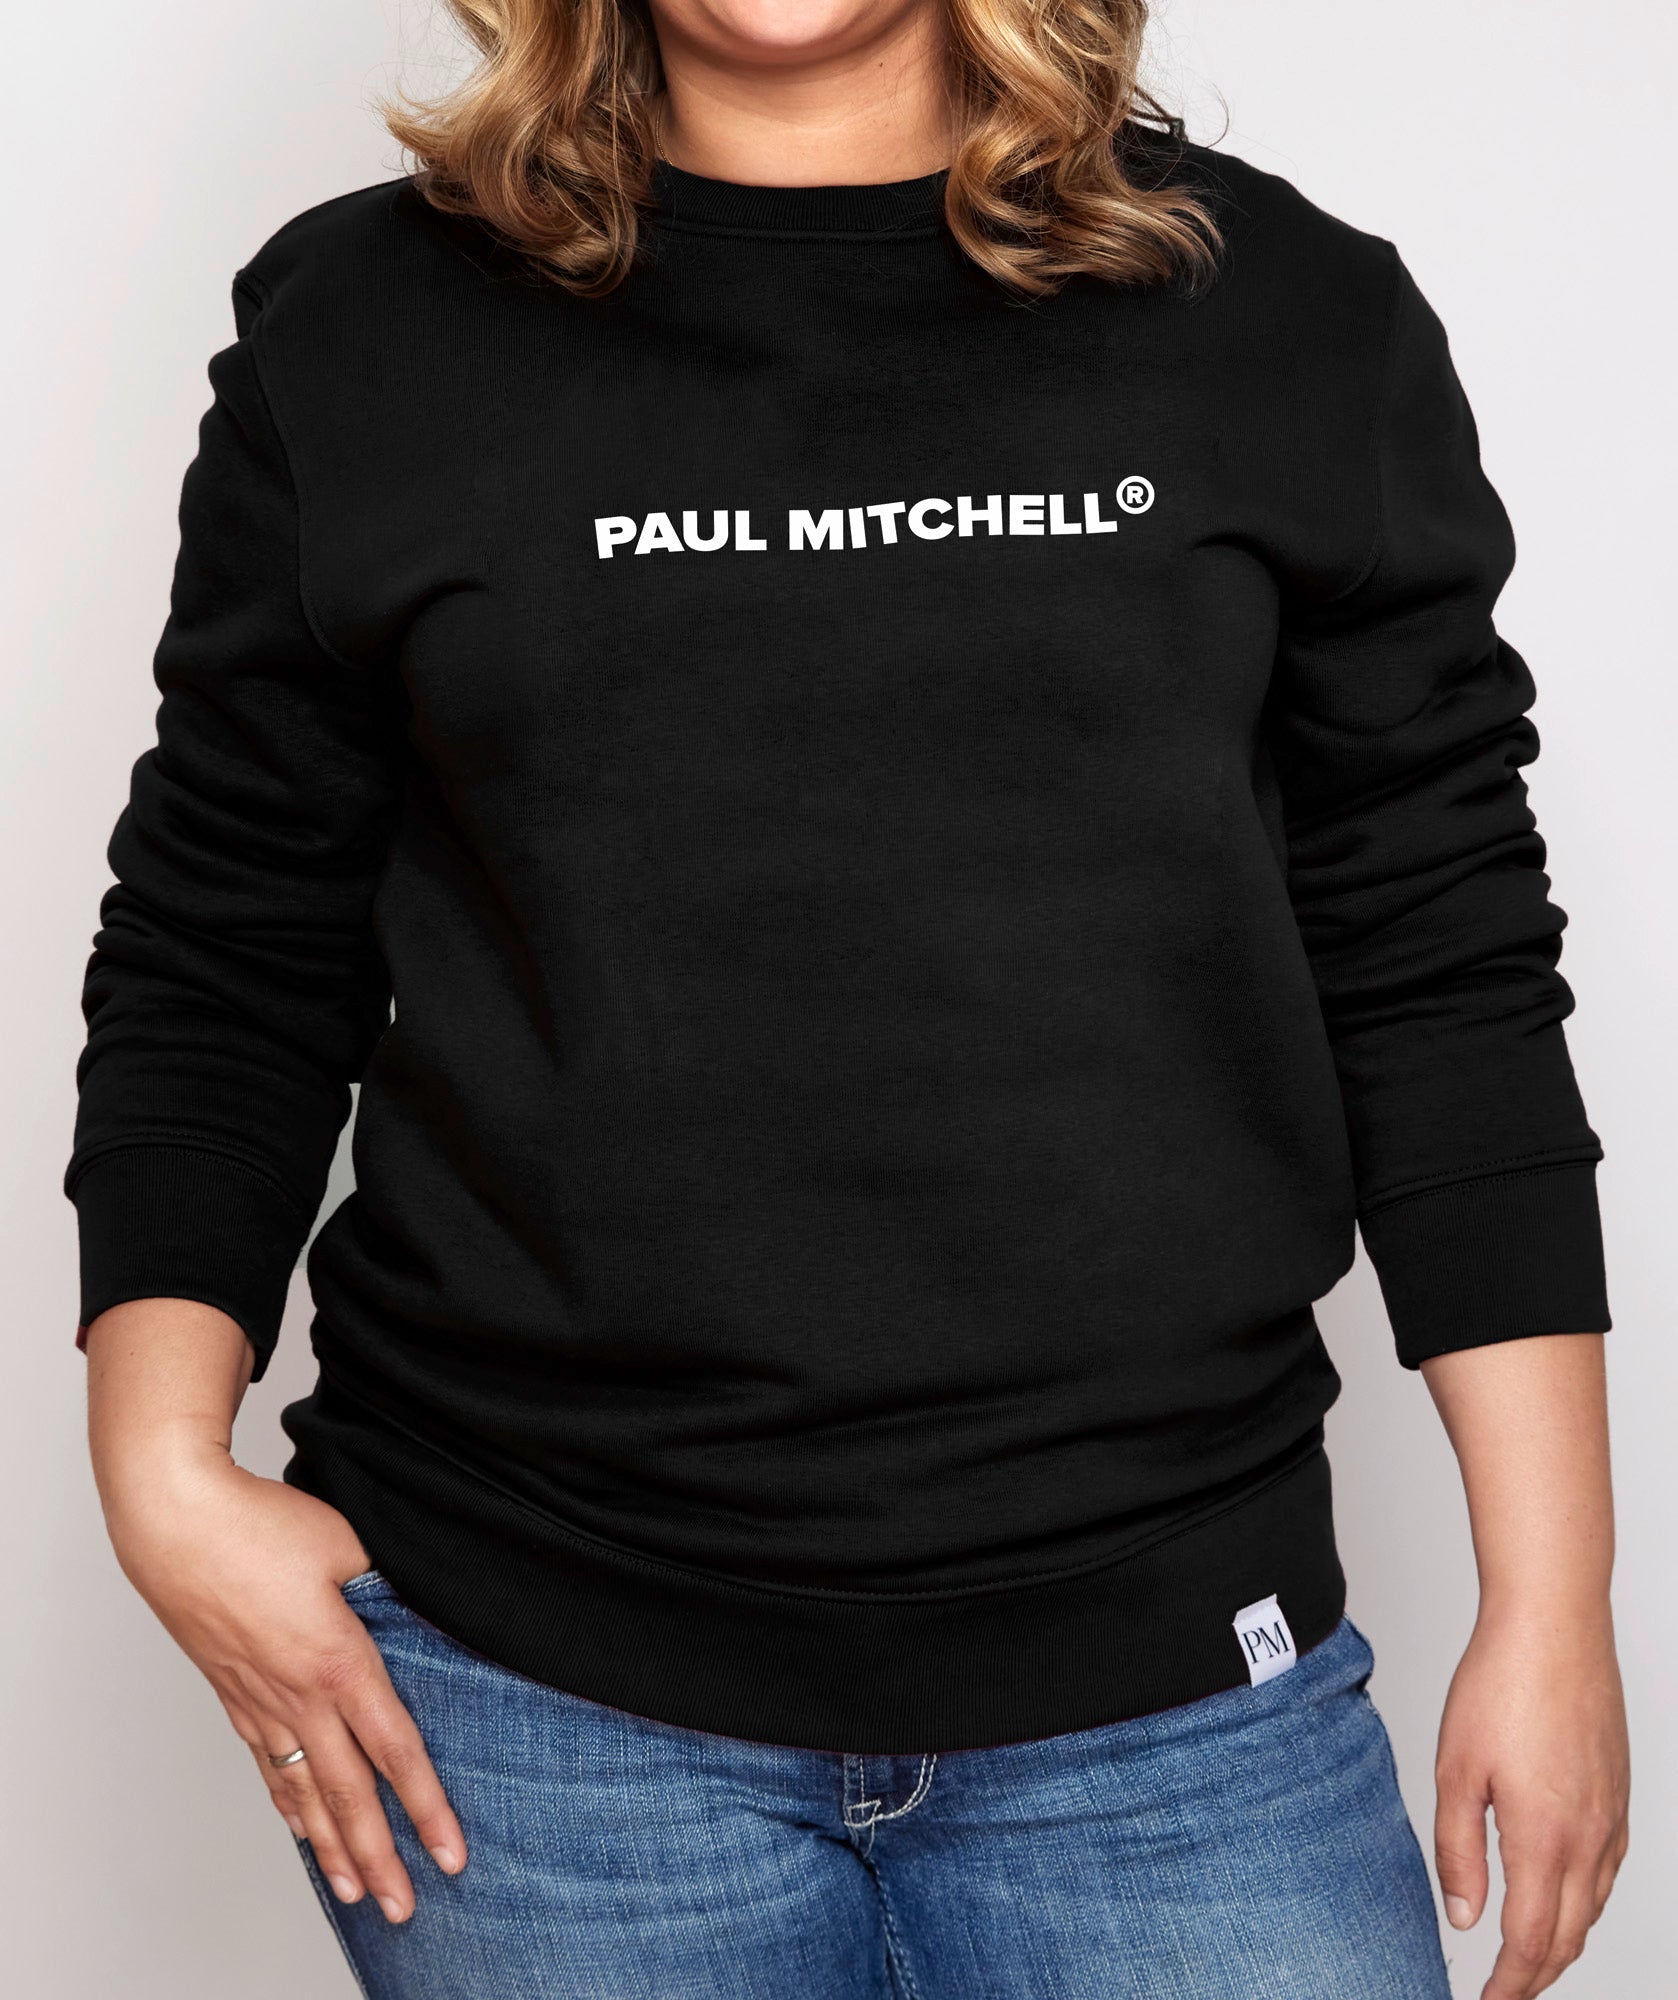 PAUL MITCHELL® SWEATSHIRT "LOGO“ – UNISEX - Paul Mitchell